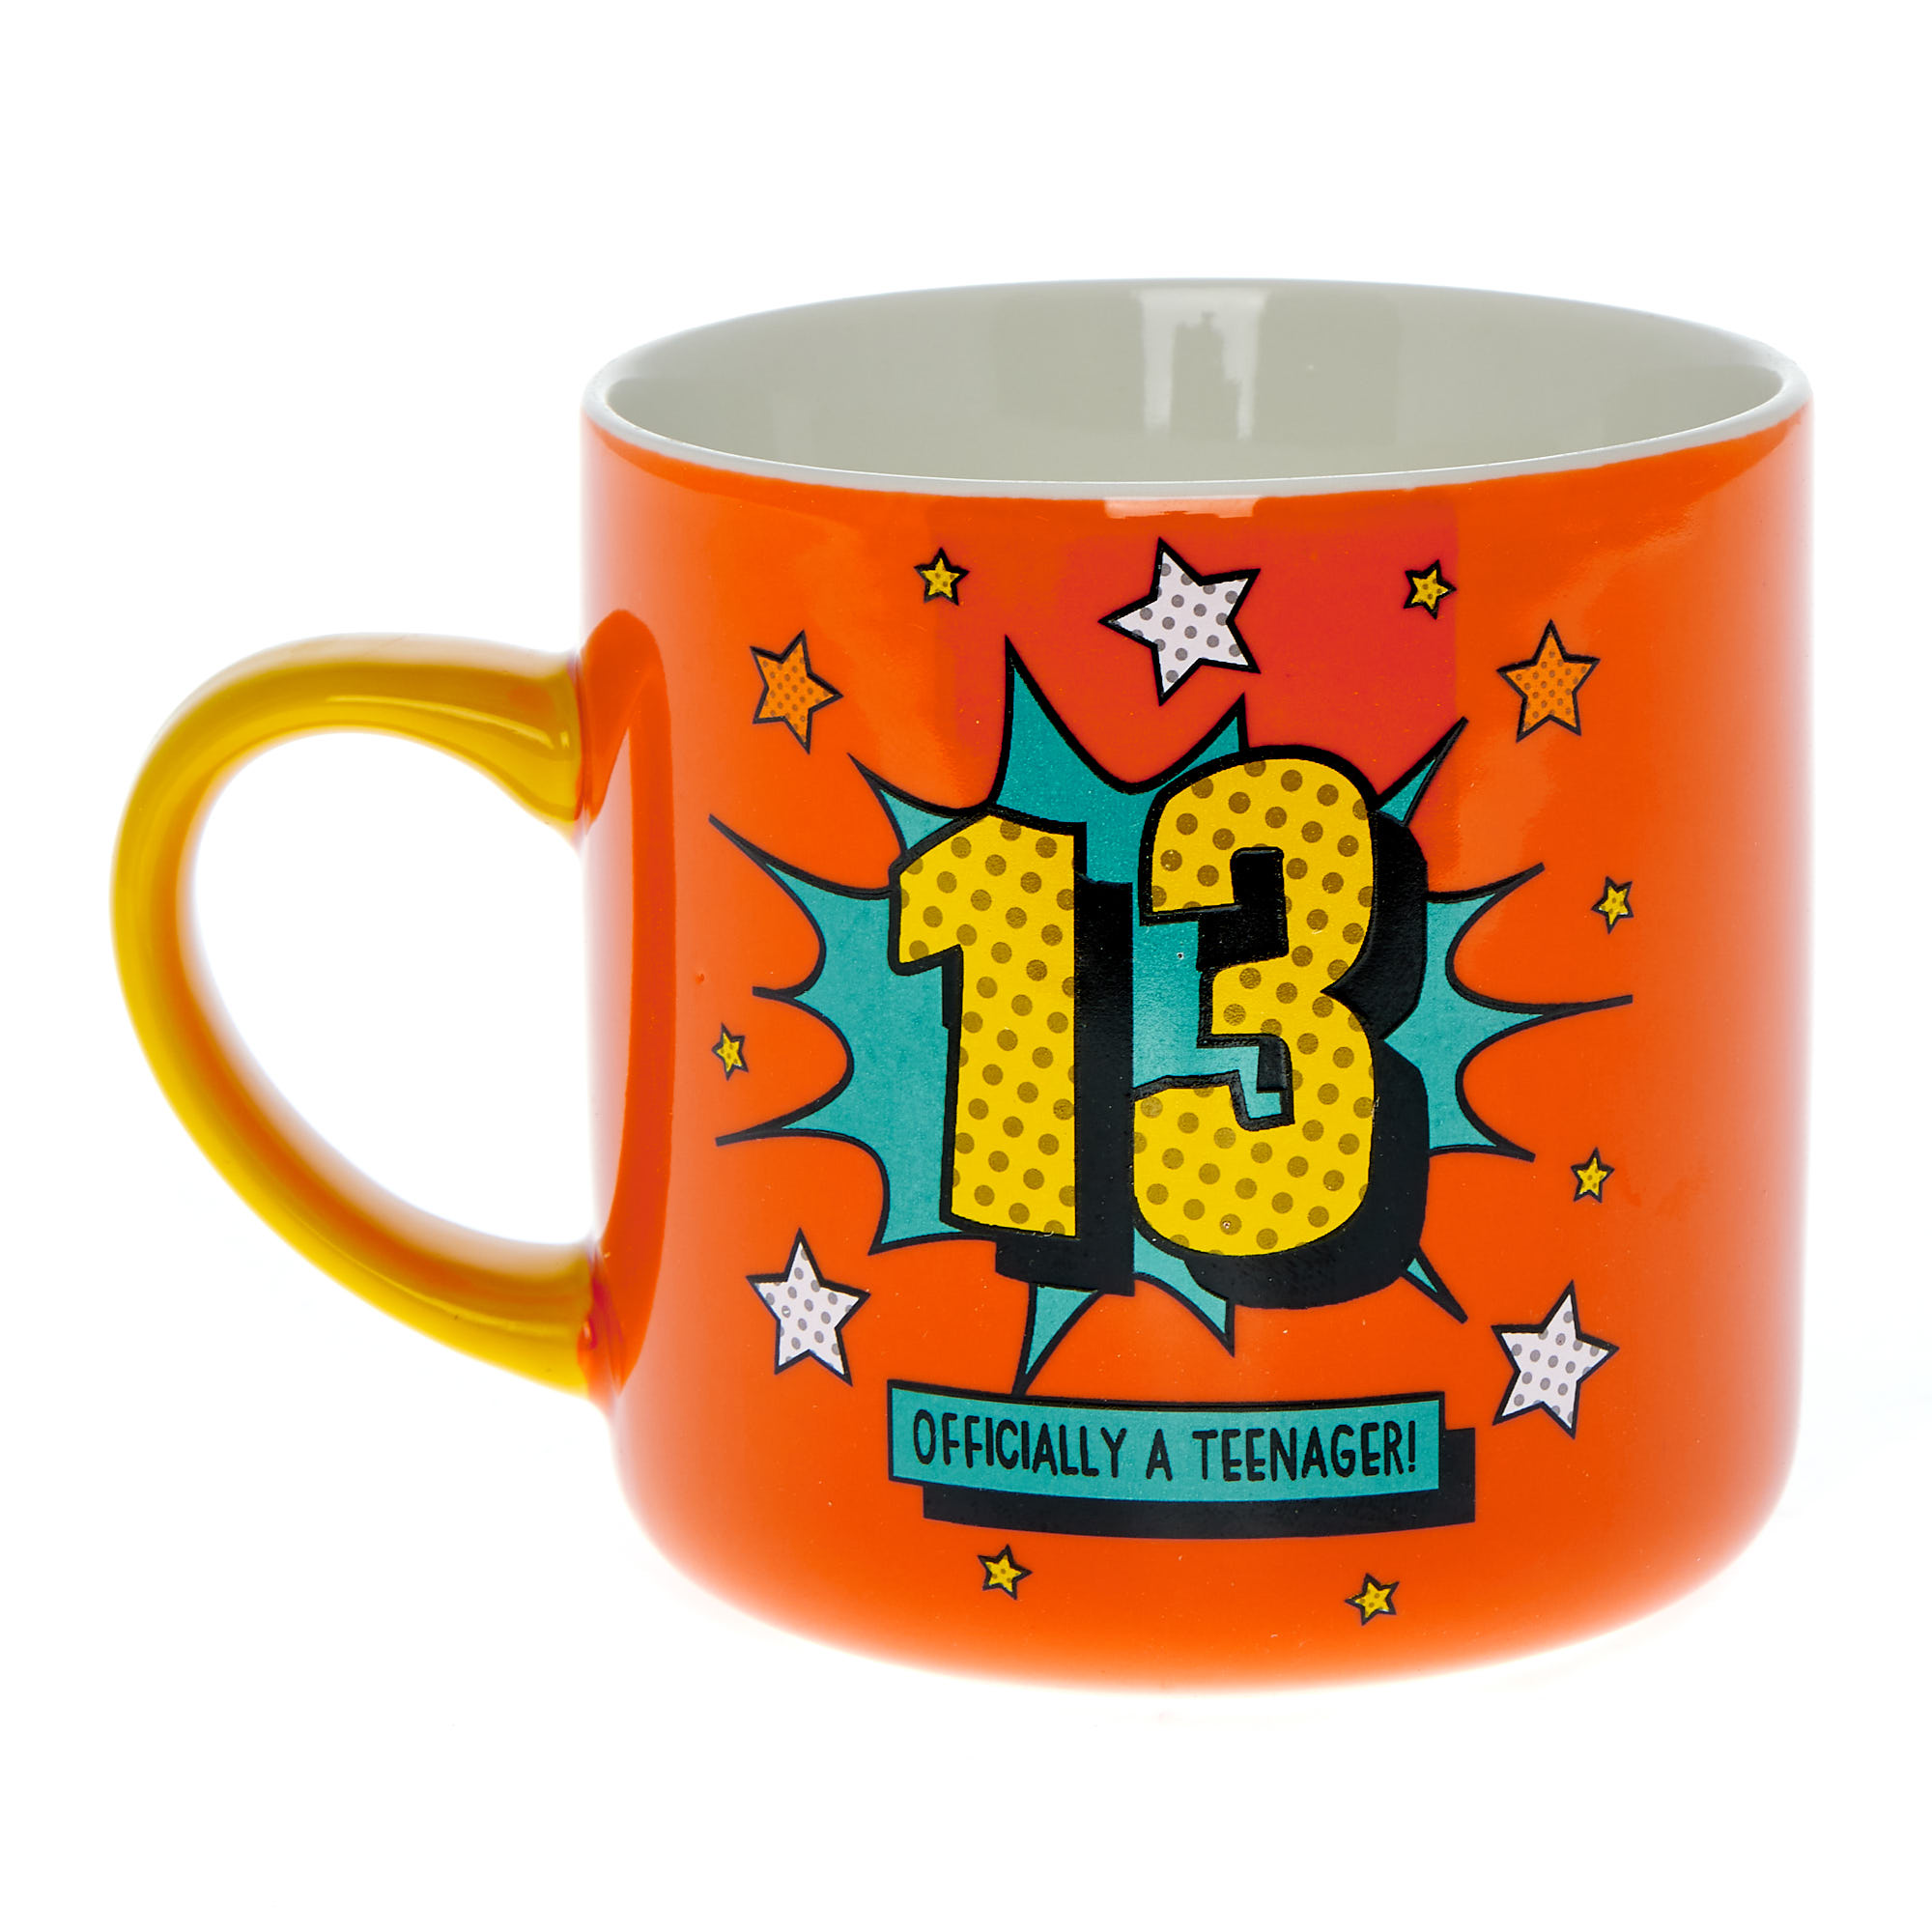 Officially a Teenager 13th Birthday Mug